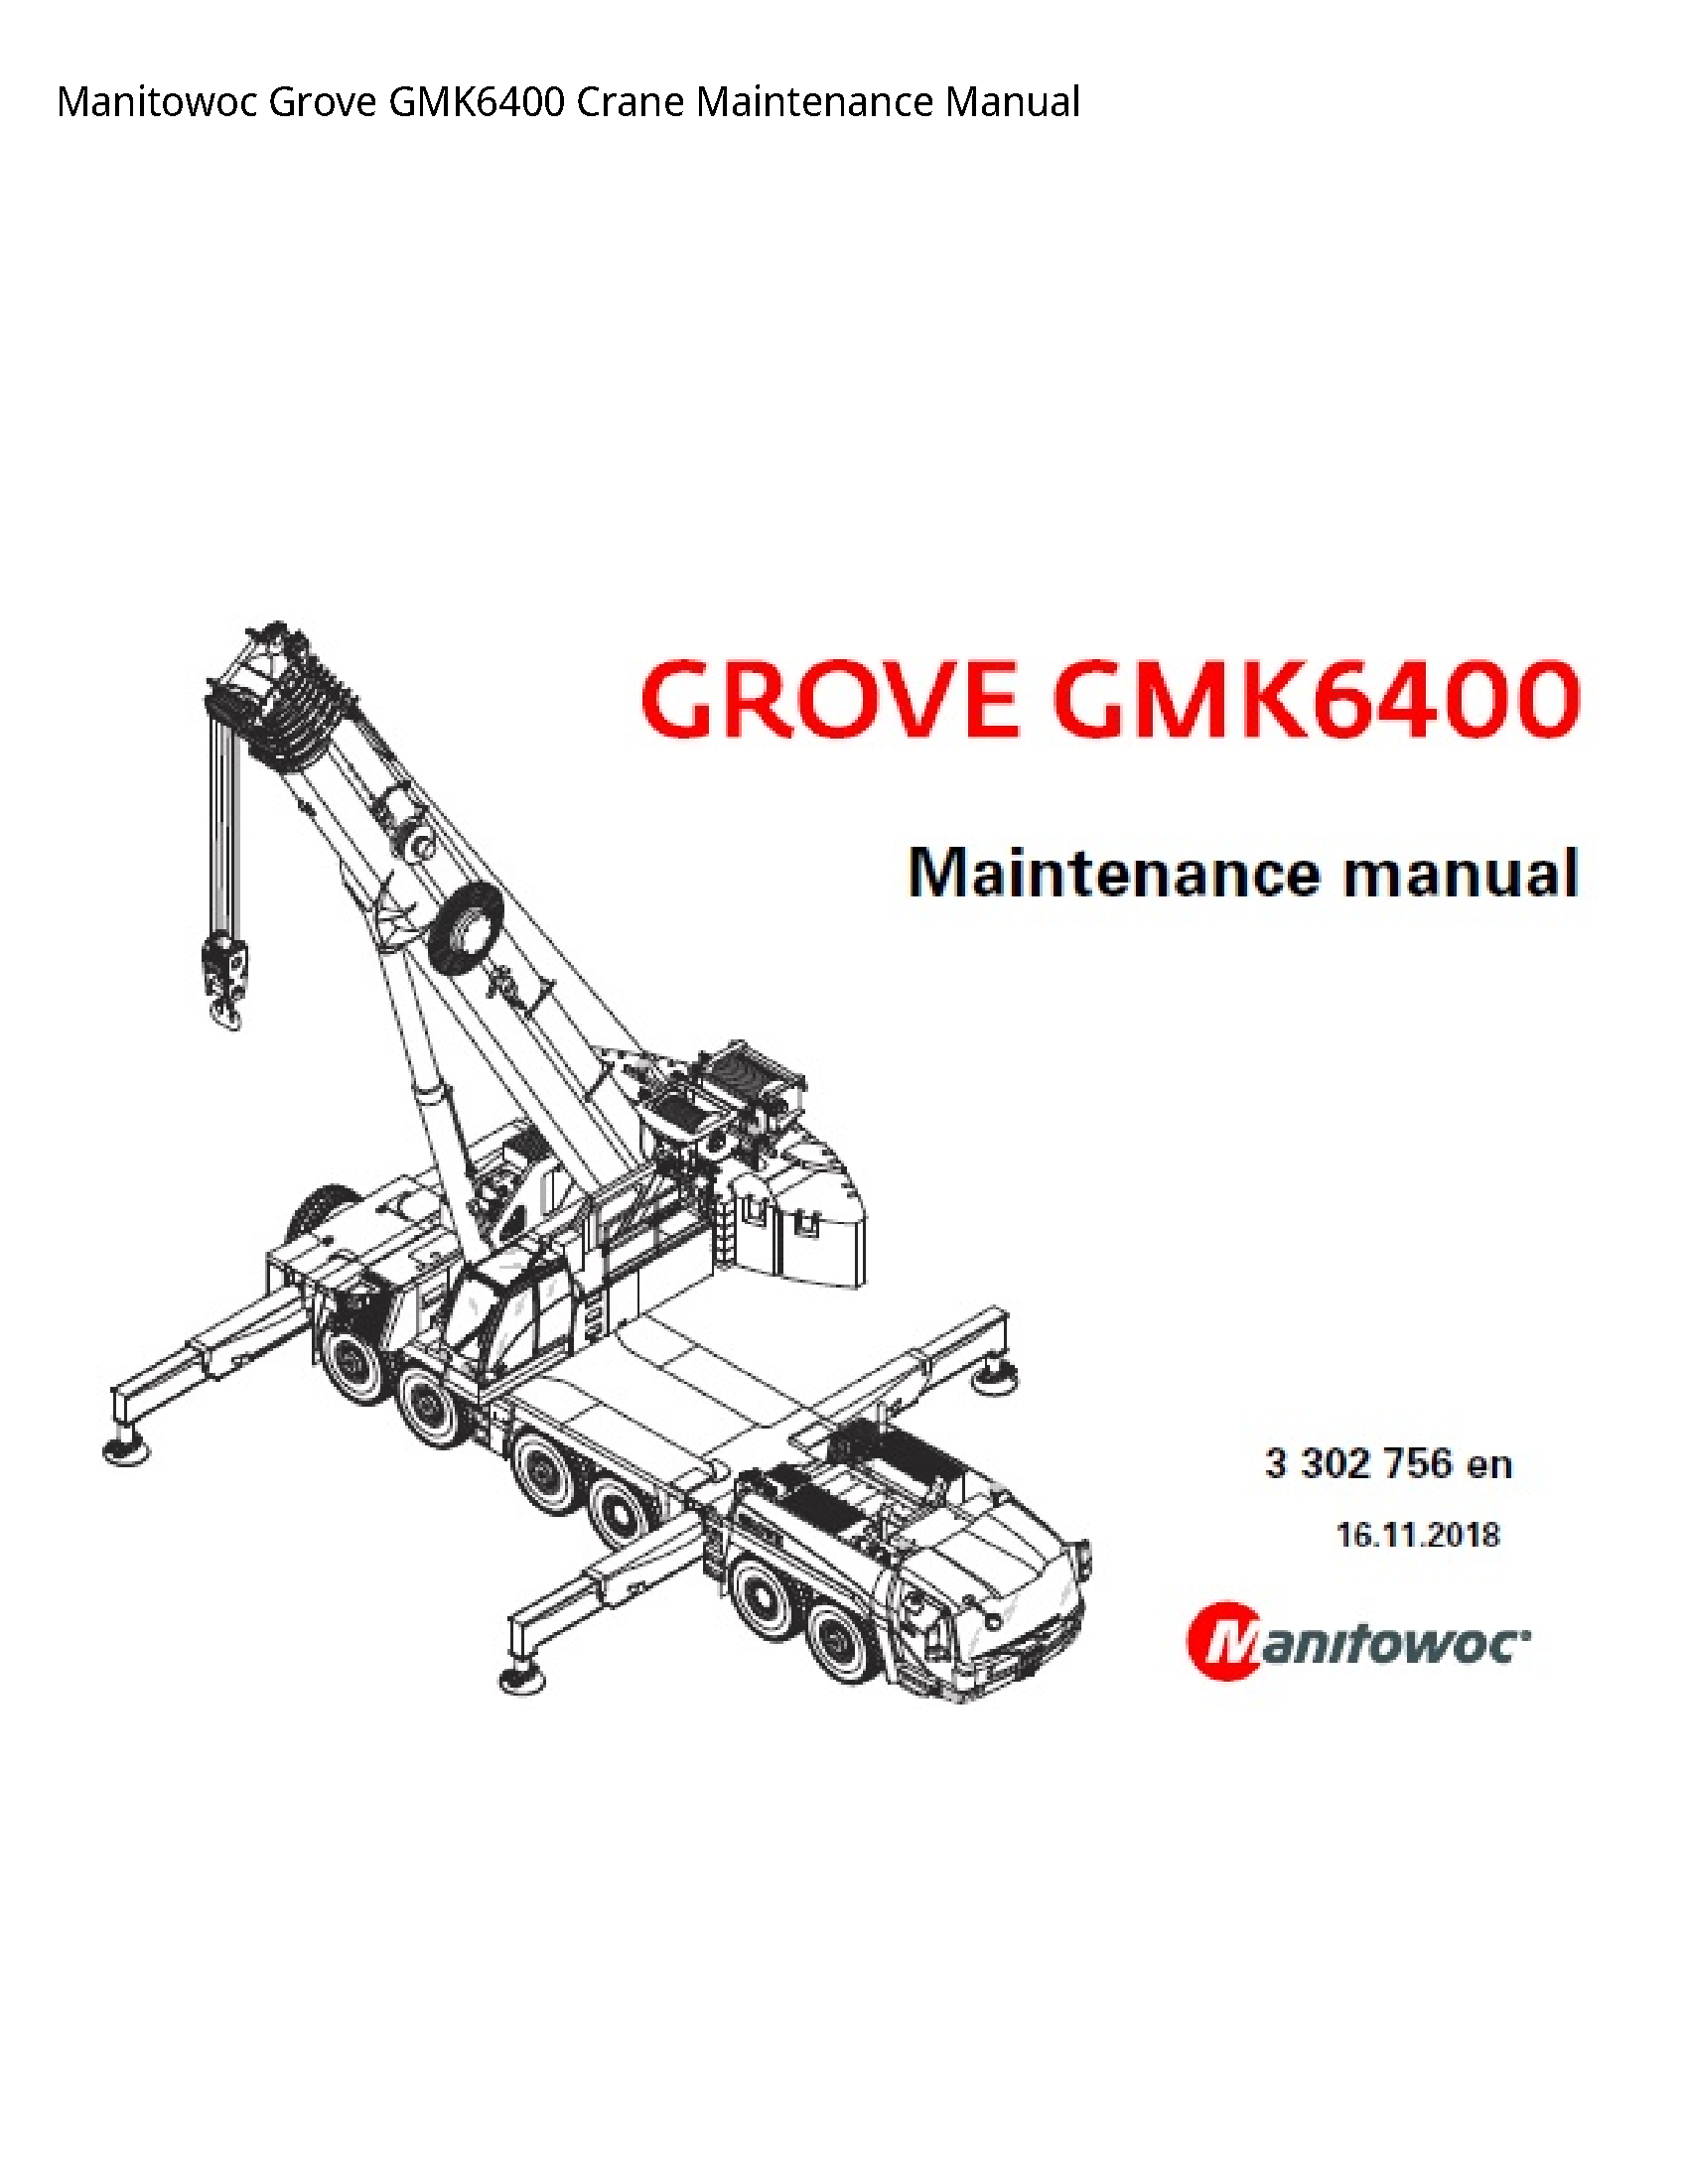 Manitowoc GMK6400 Grove Crane Maintenance manual